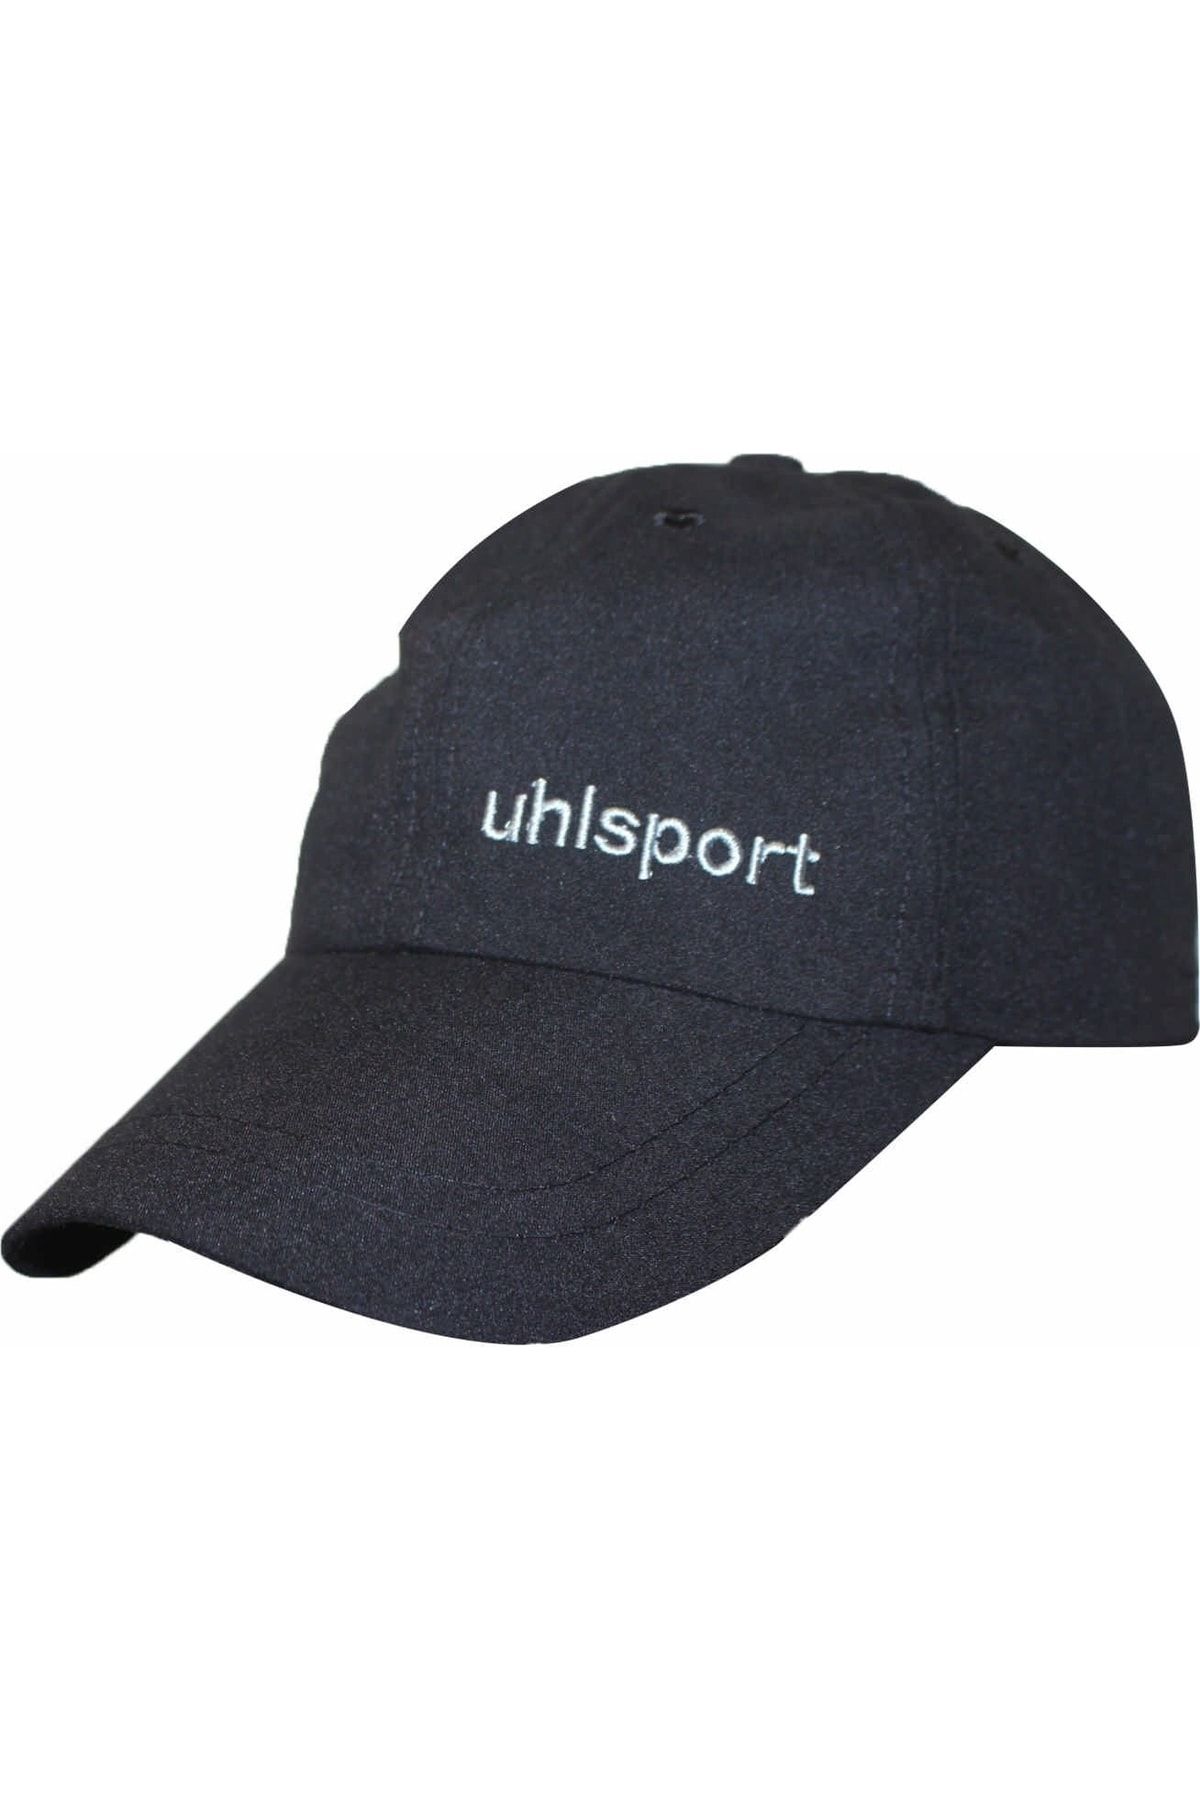 uhlsport 20.002 Mıcro Leo Unisex Şapka Siyah 8201010